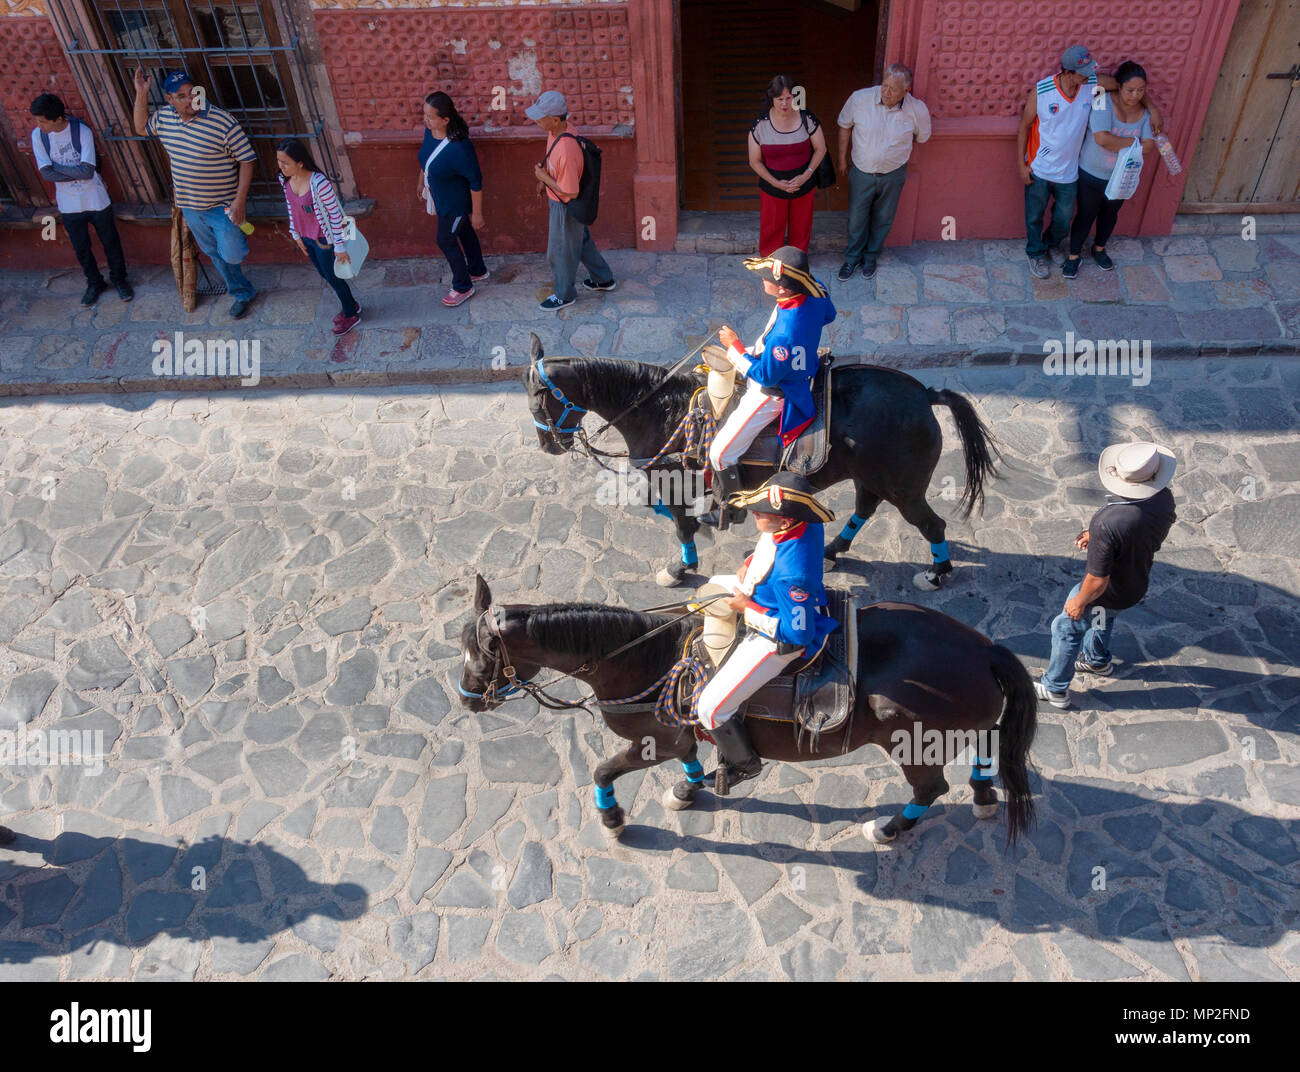 Two uniformed riders on horseback in a parade in San Miguel de Allende, Mexico Stock Photo